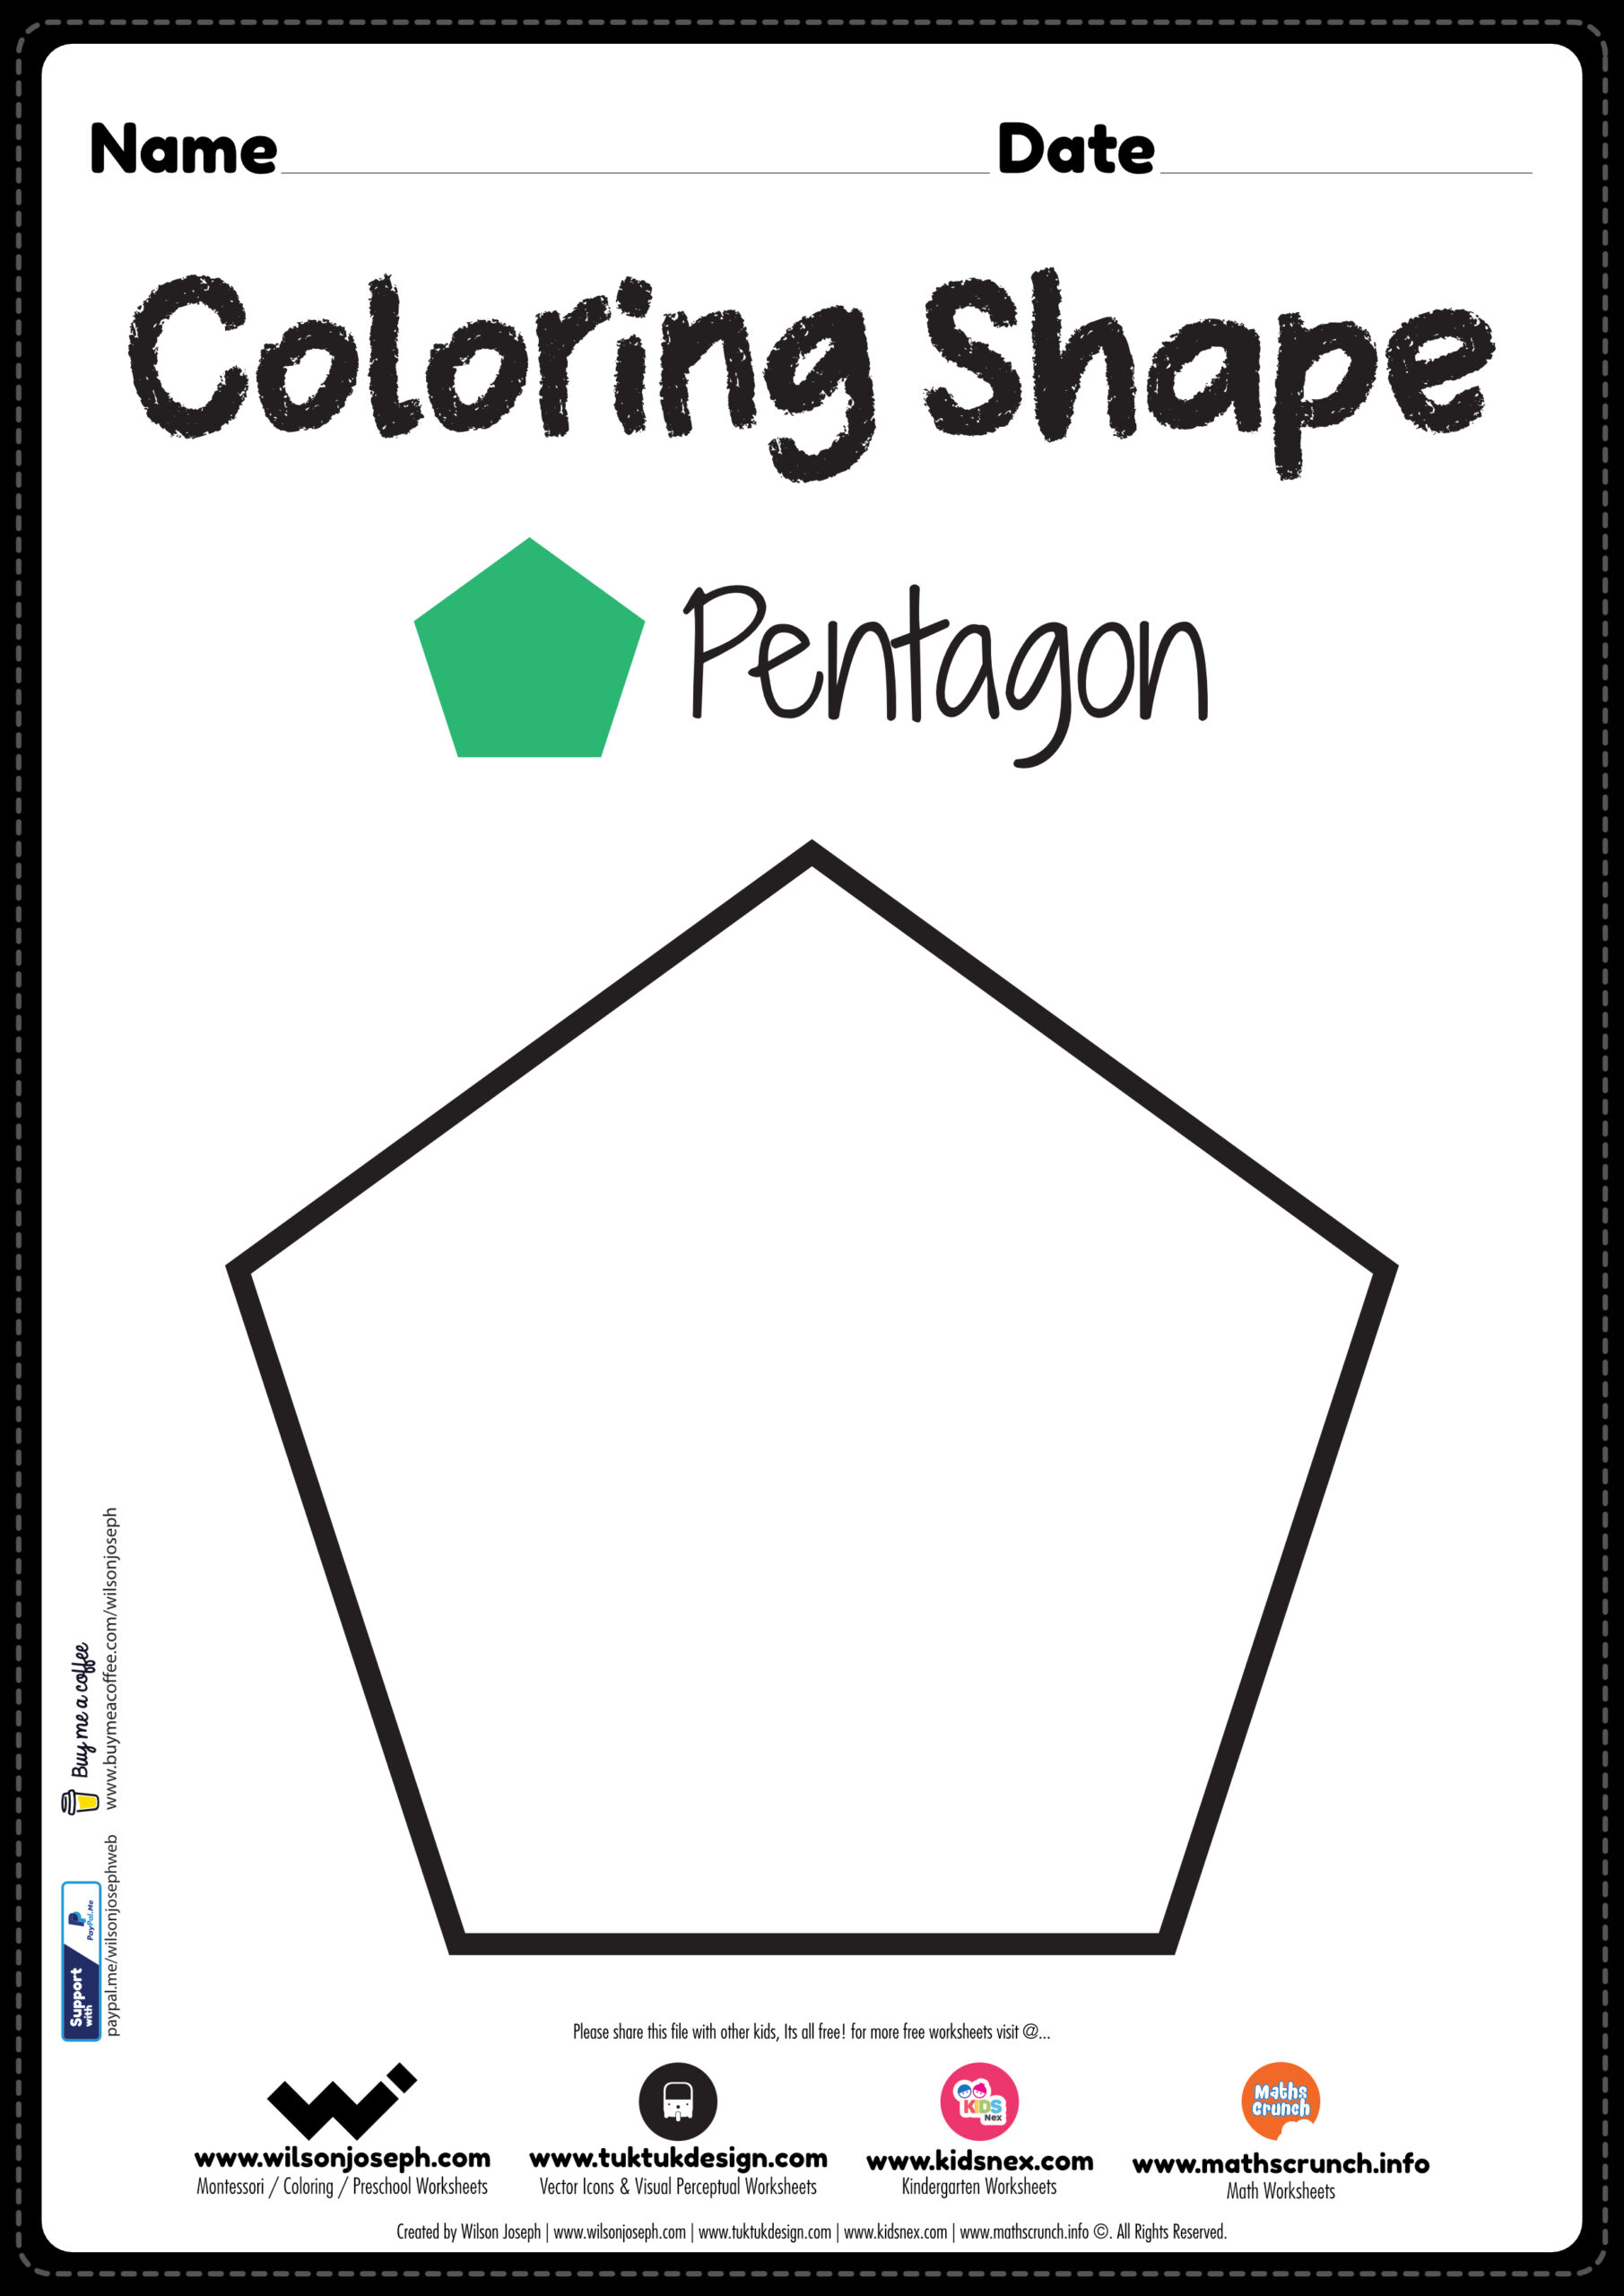 Pentagon Coloring Page - Free Printable PDF for Kindergarten